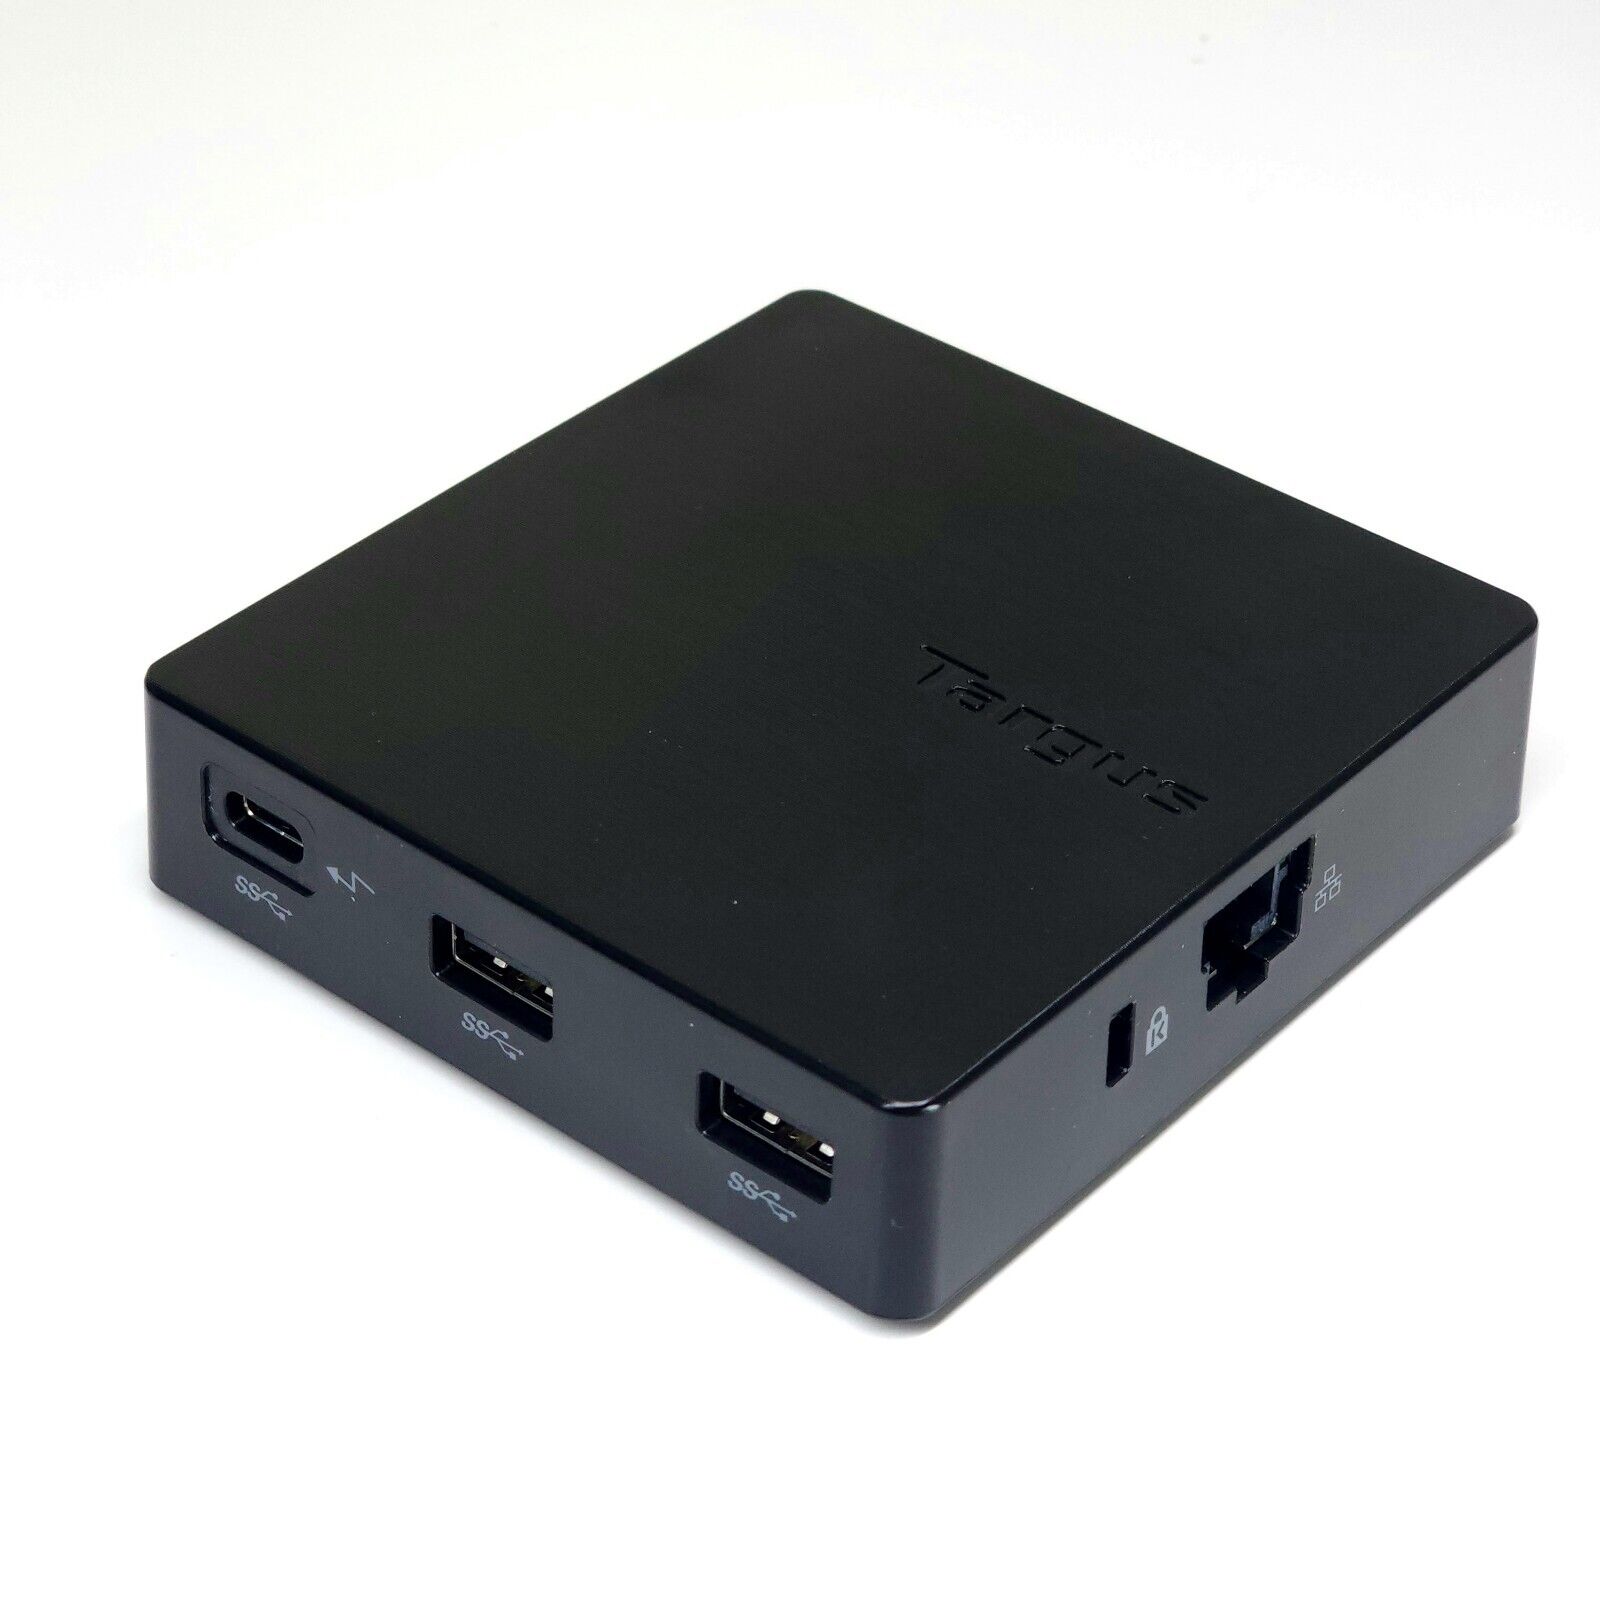 Targus USB-C Travel Dock model DOCK412-A with Power Pass-Through